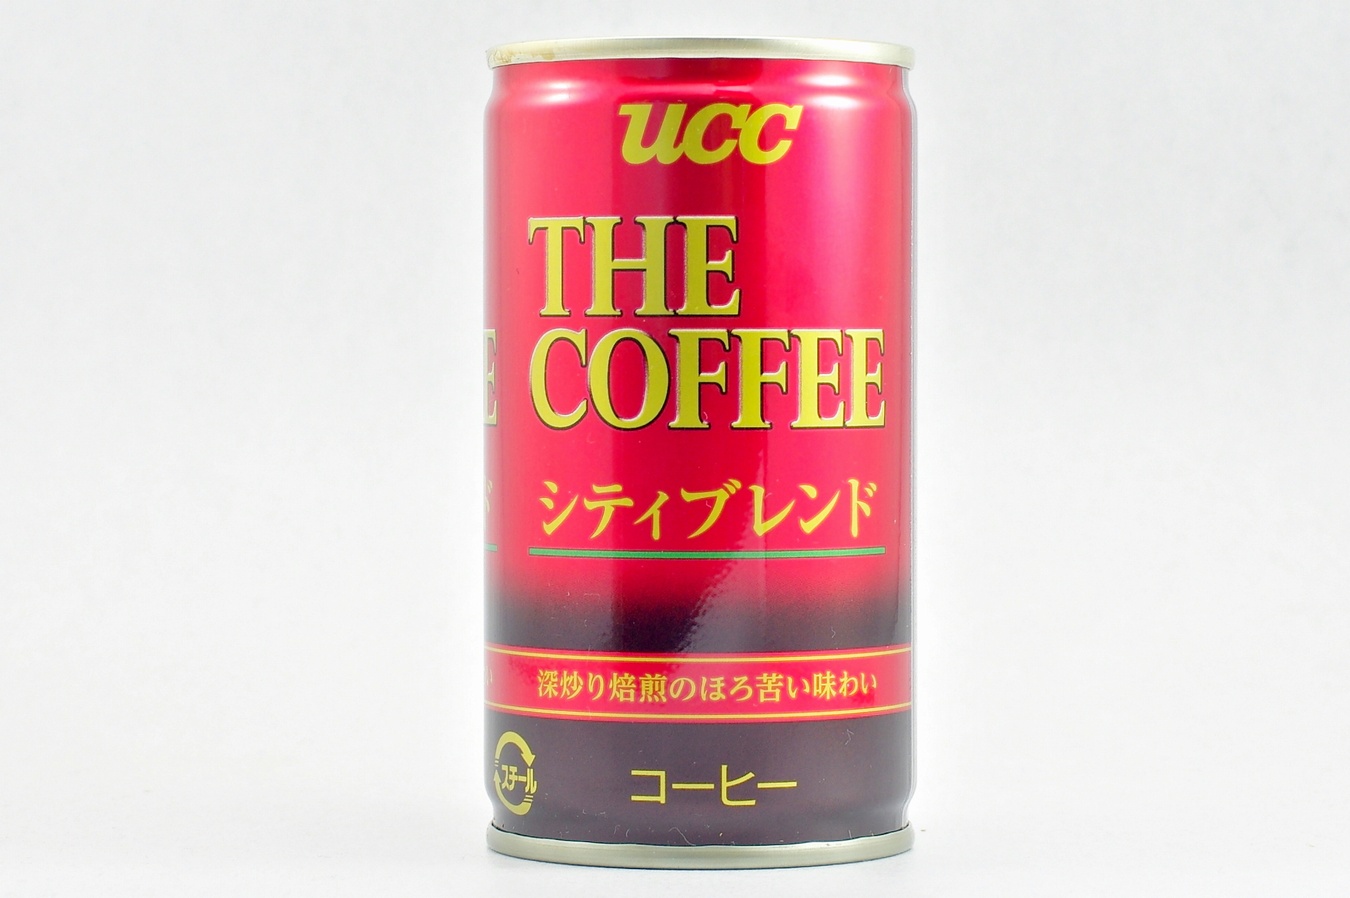 UCC THE COFFEE シティブレンド 2015年2月